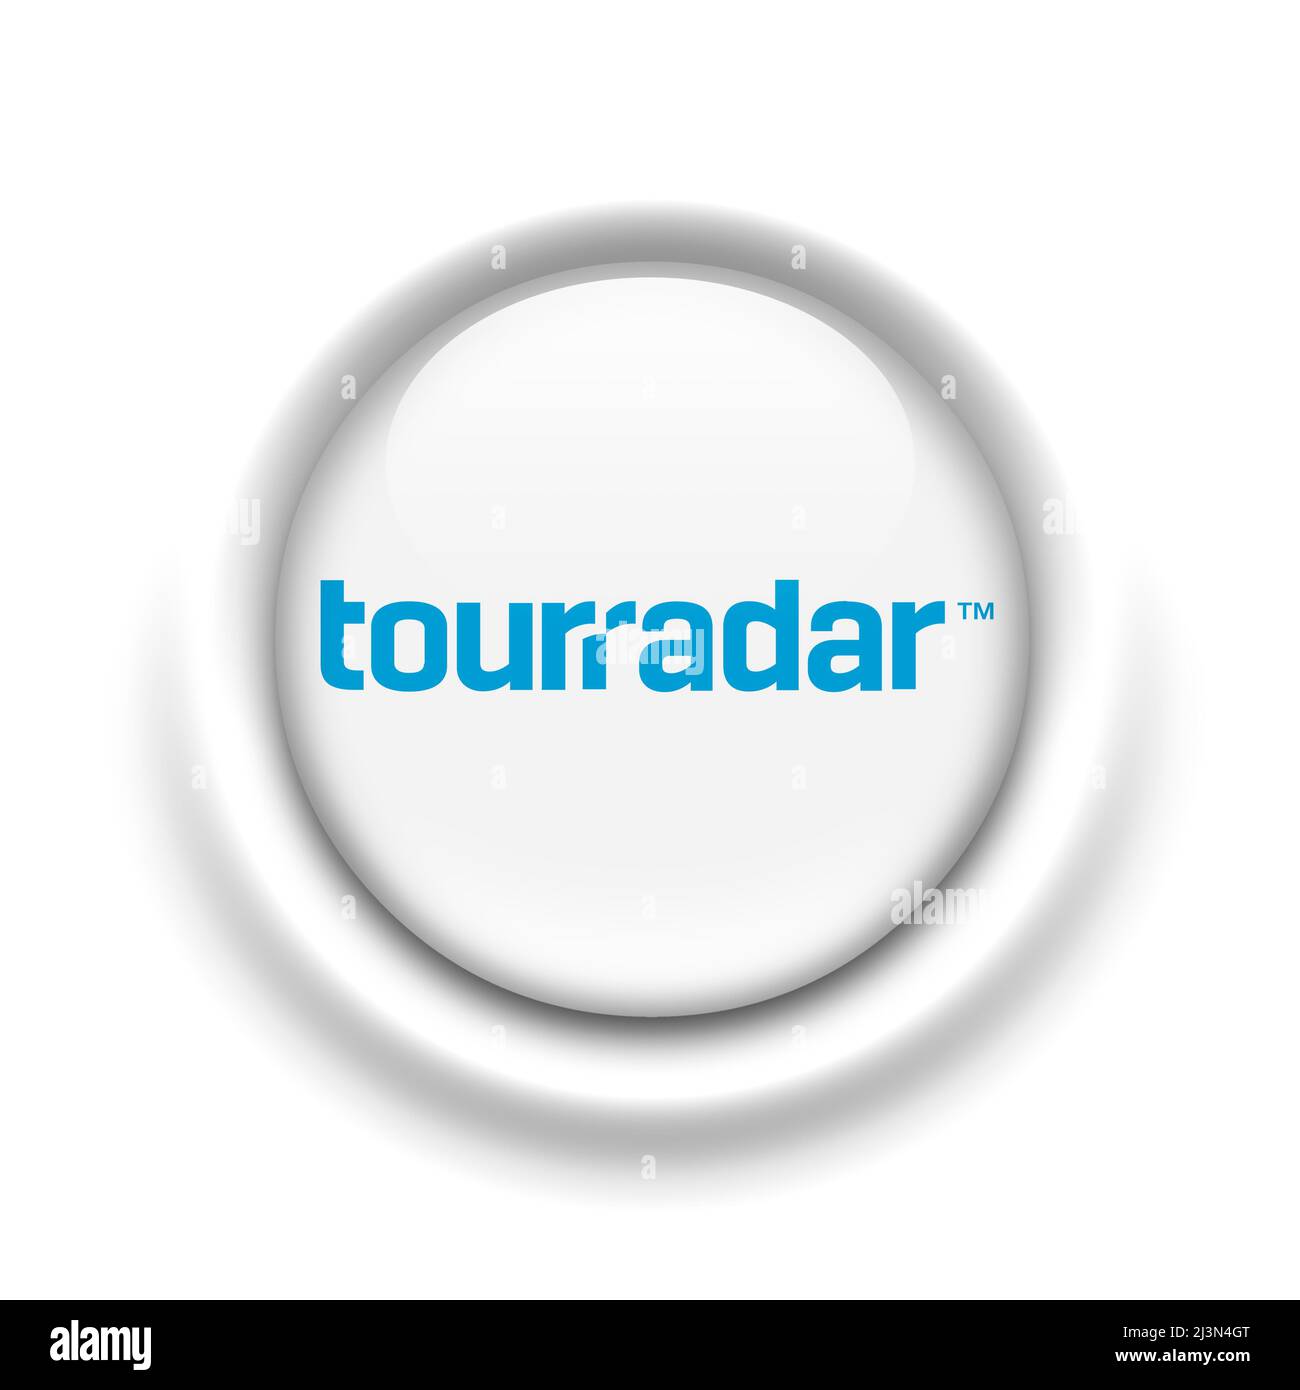 Tourradar logo Stock Photo